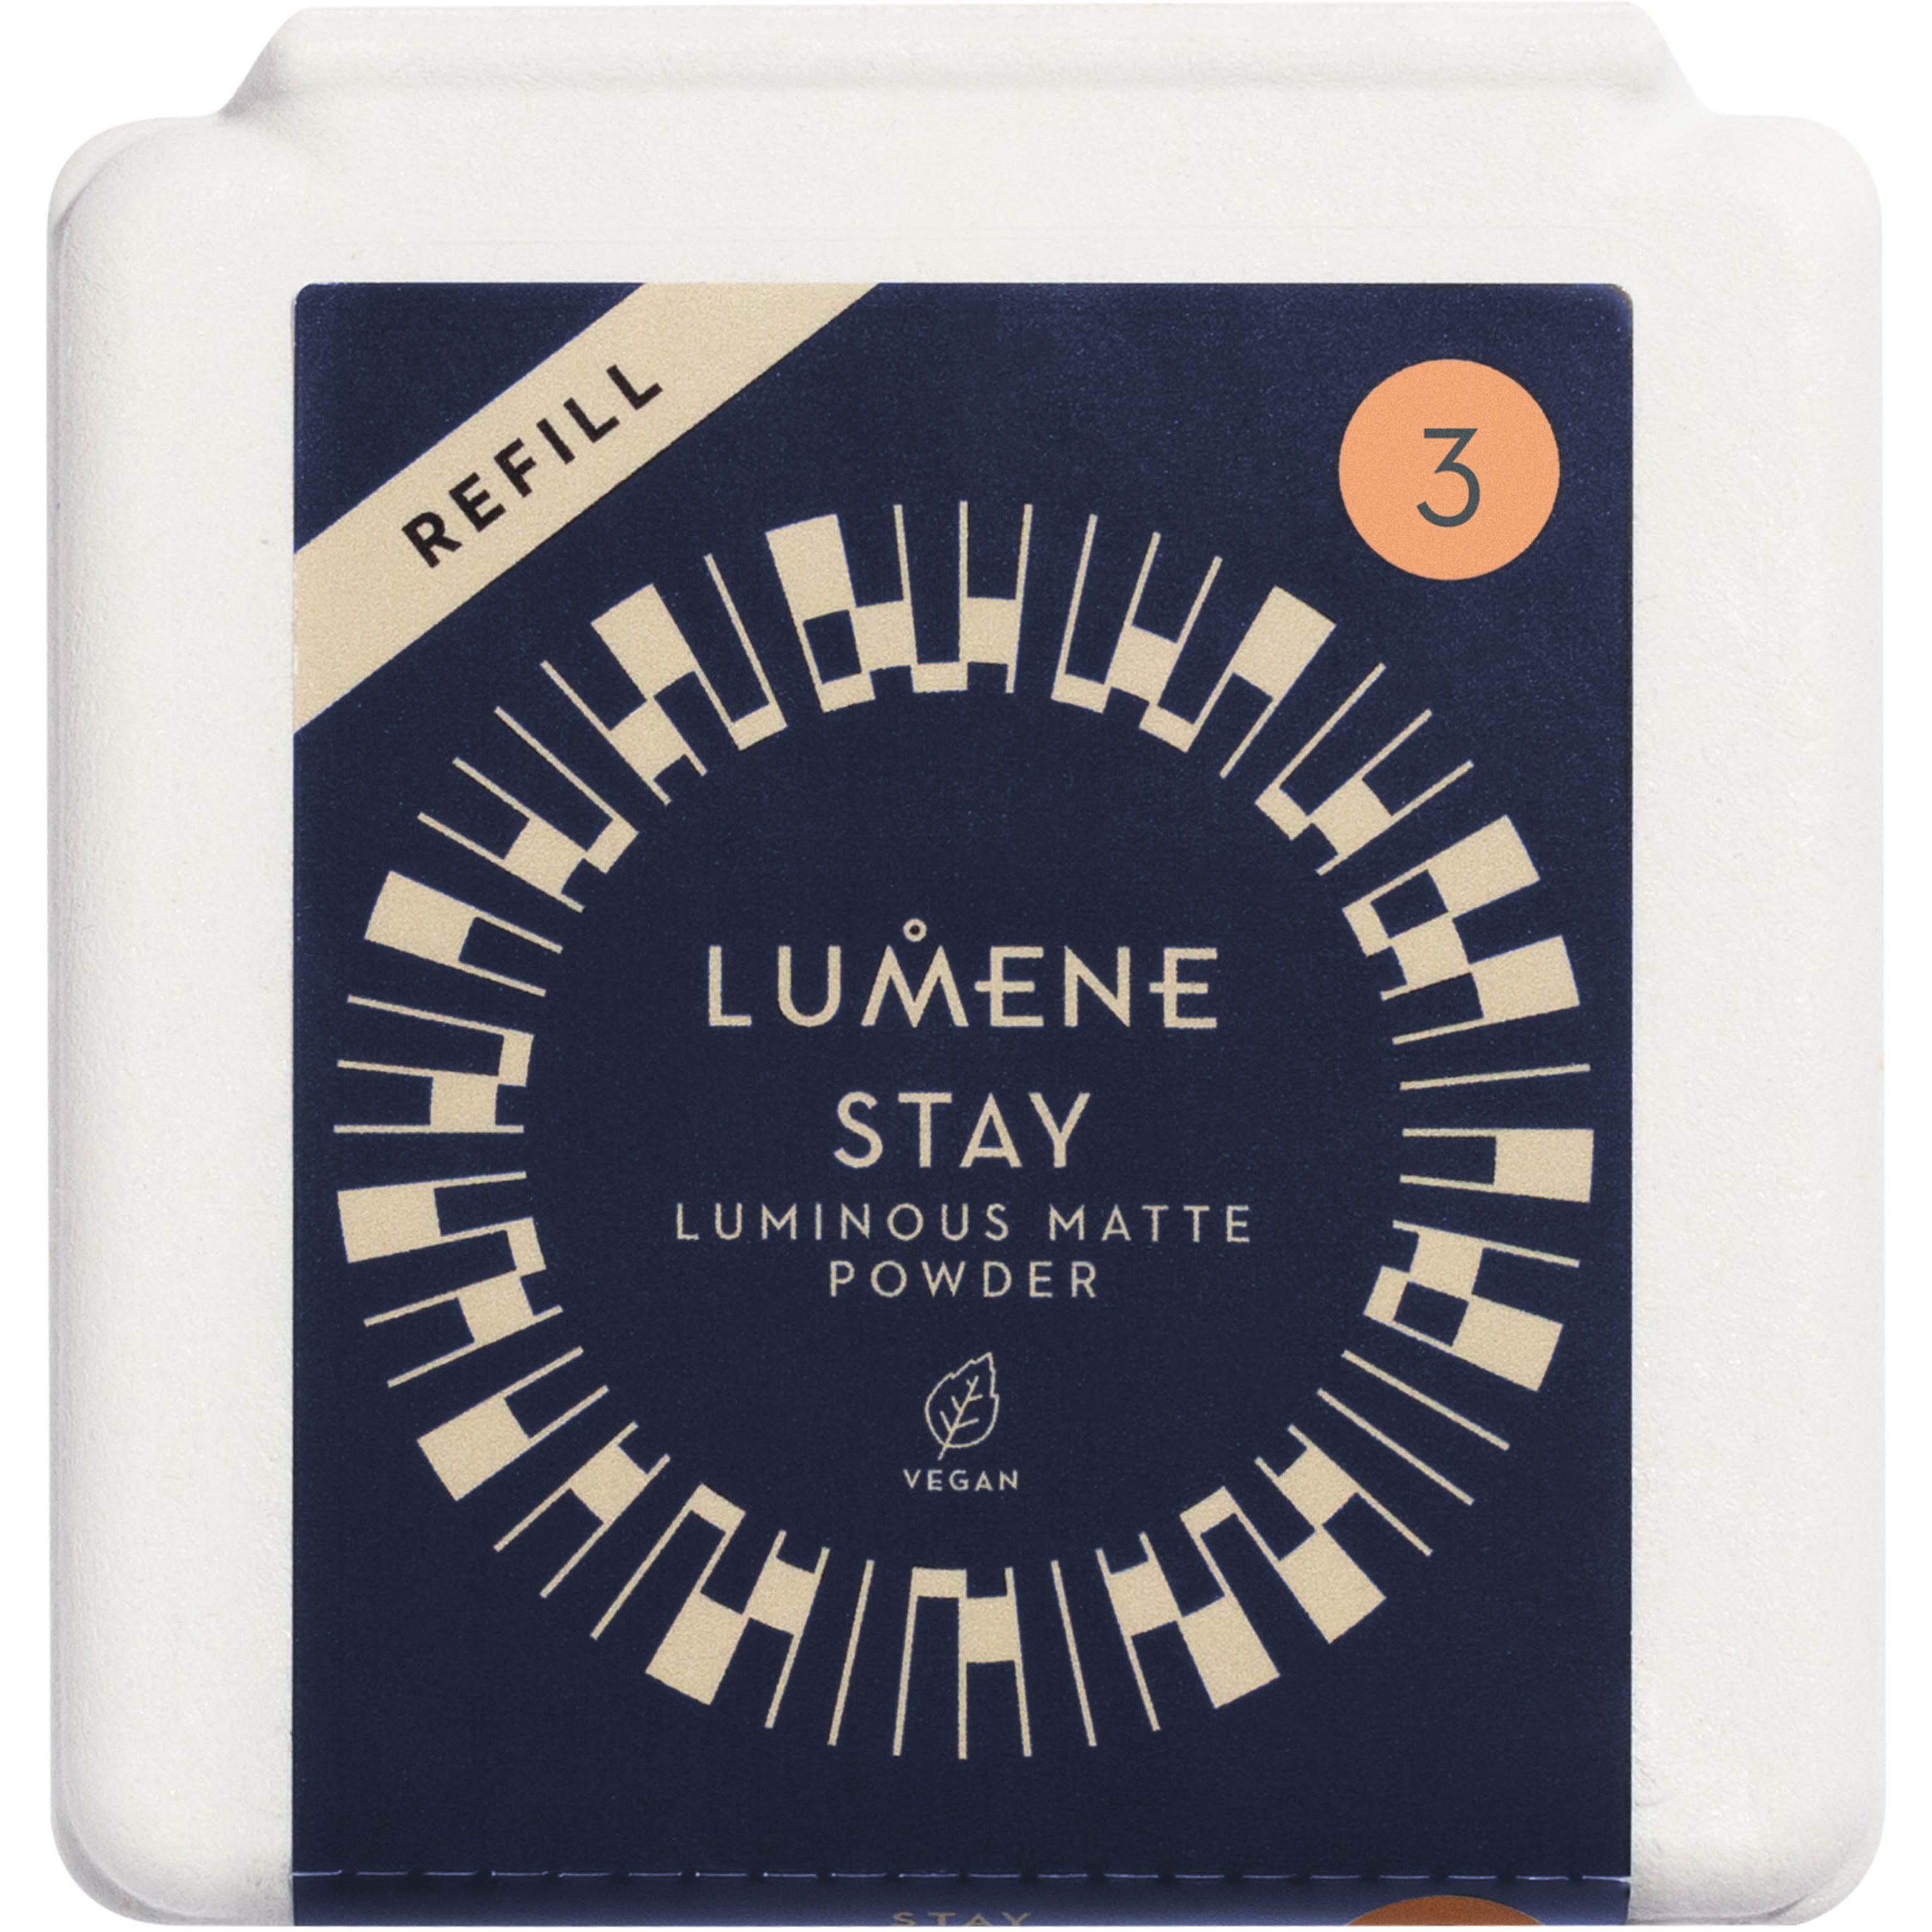 Lumene Stay Luminous Matte Powder Refill 3